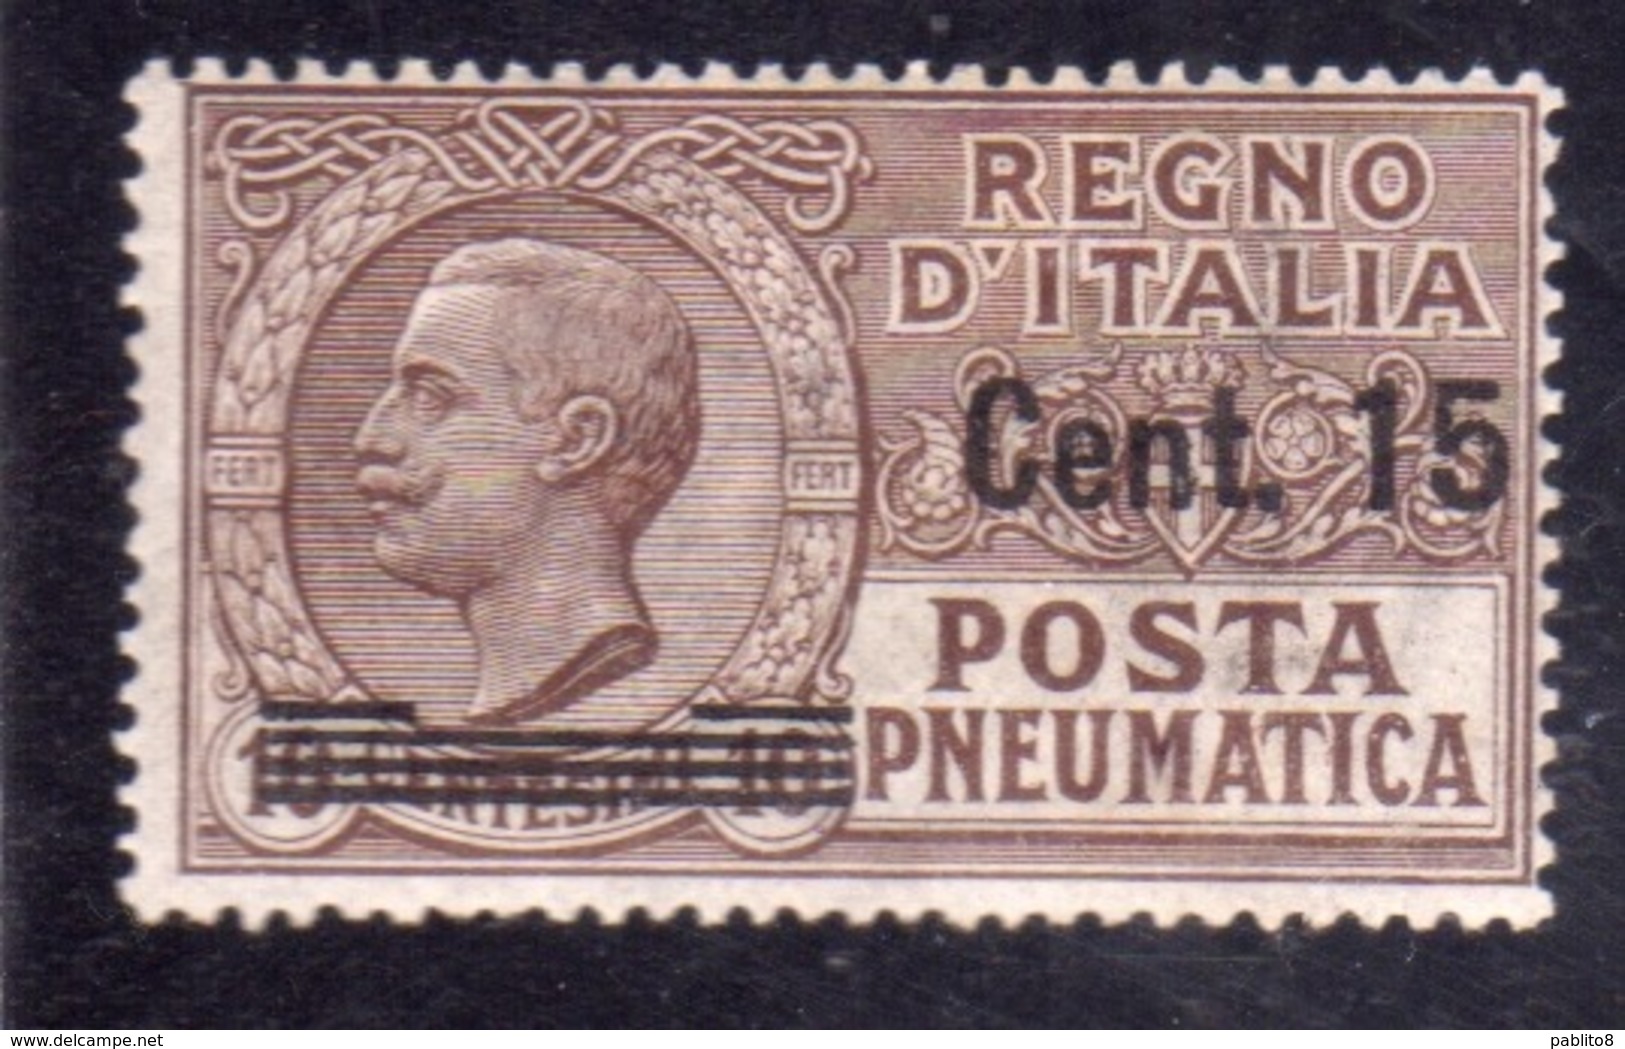 ITALIA REGNO ITALY KINGDOM 1913 1923 POSTA PNEUMATICA VITTORIO EMANUELE III CENT.15c MNH - Poste Pneumatique